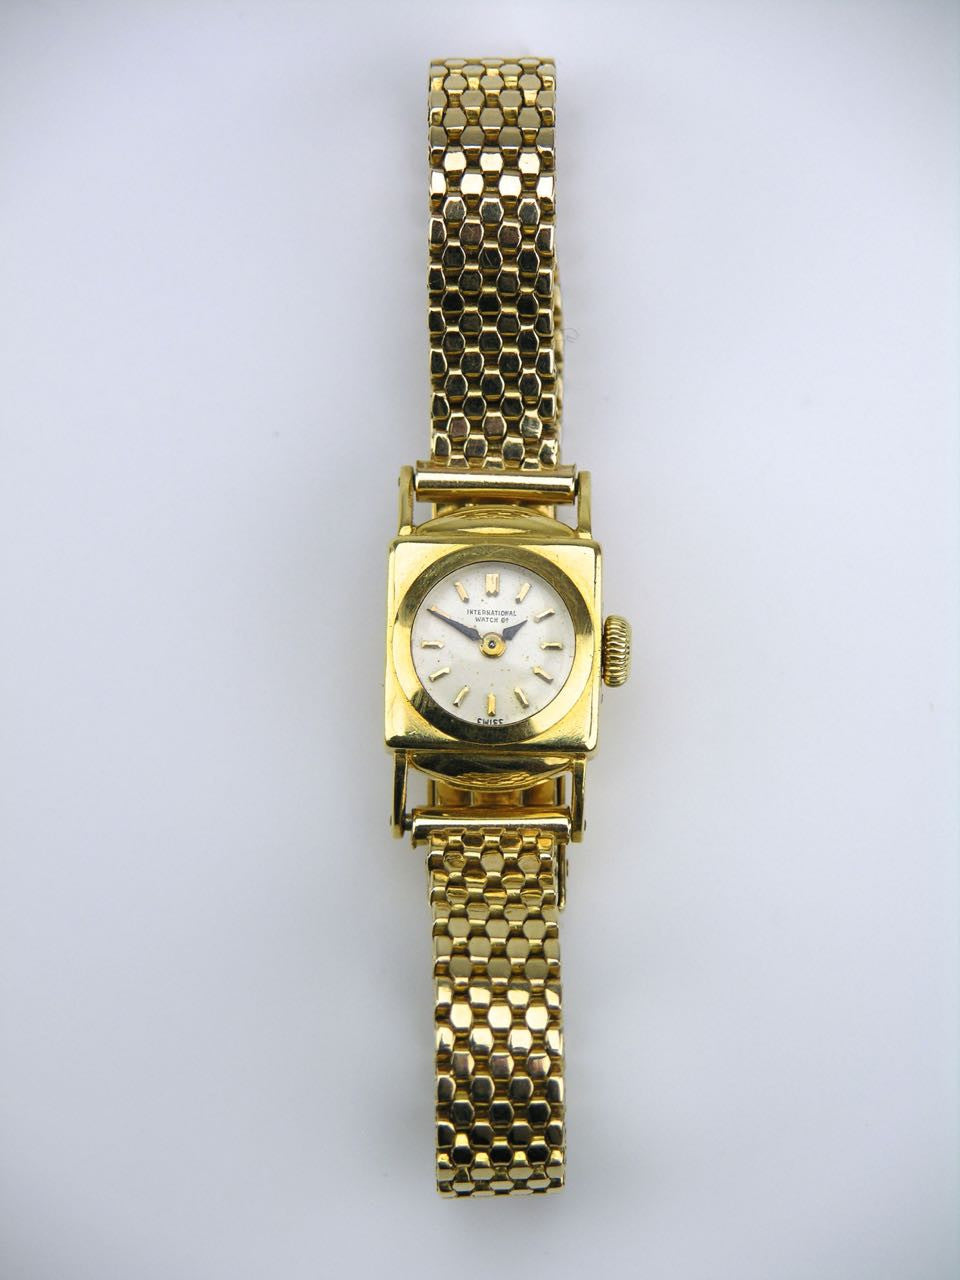 International Watch Company 14k yellow gold bracelet watch